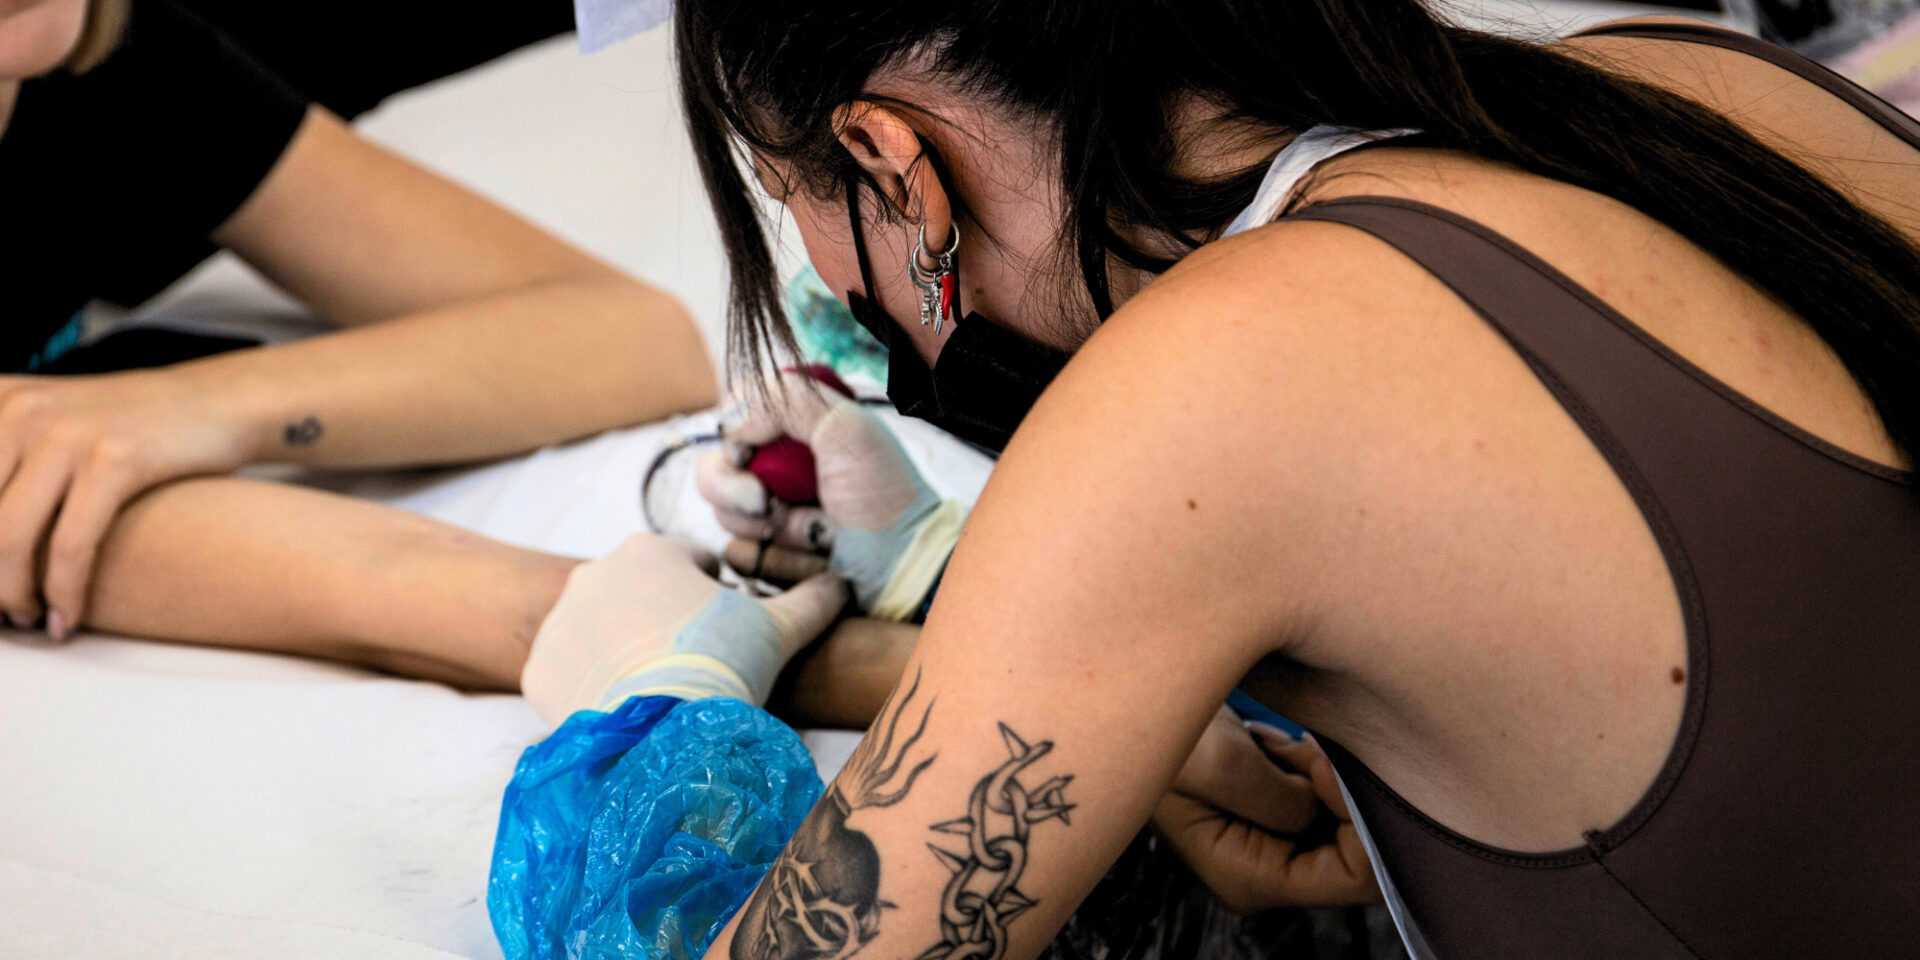 Tatuaggi per famiglie: i più ricercati dai clienti - Milano Tattoo